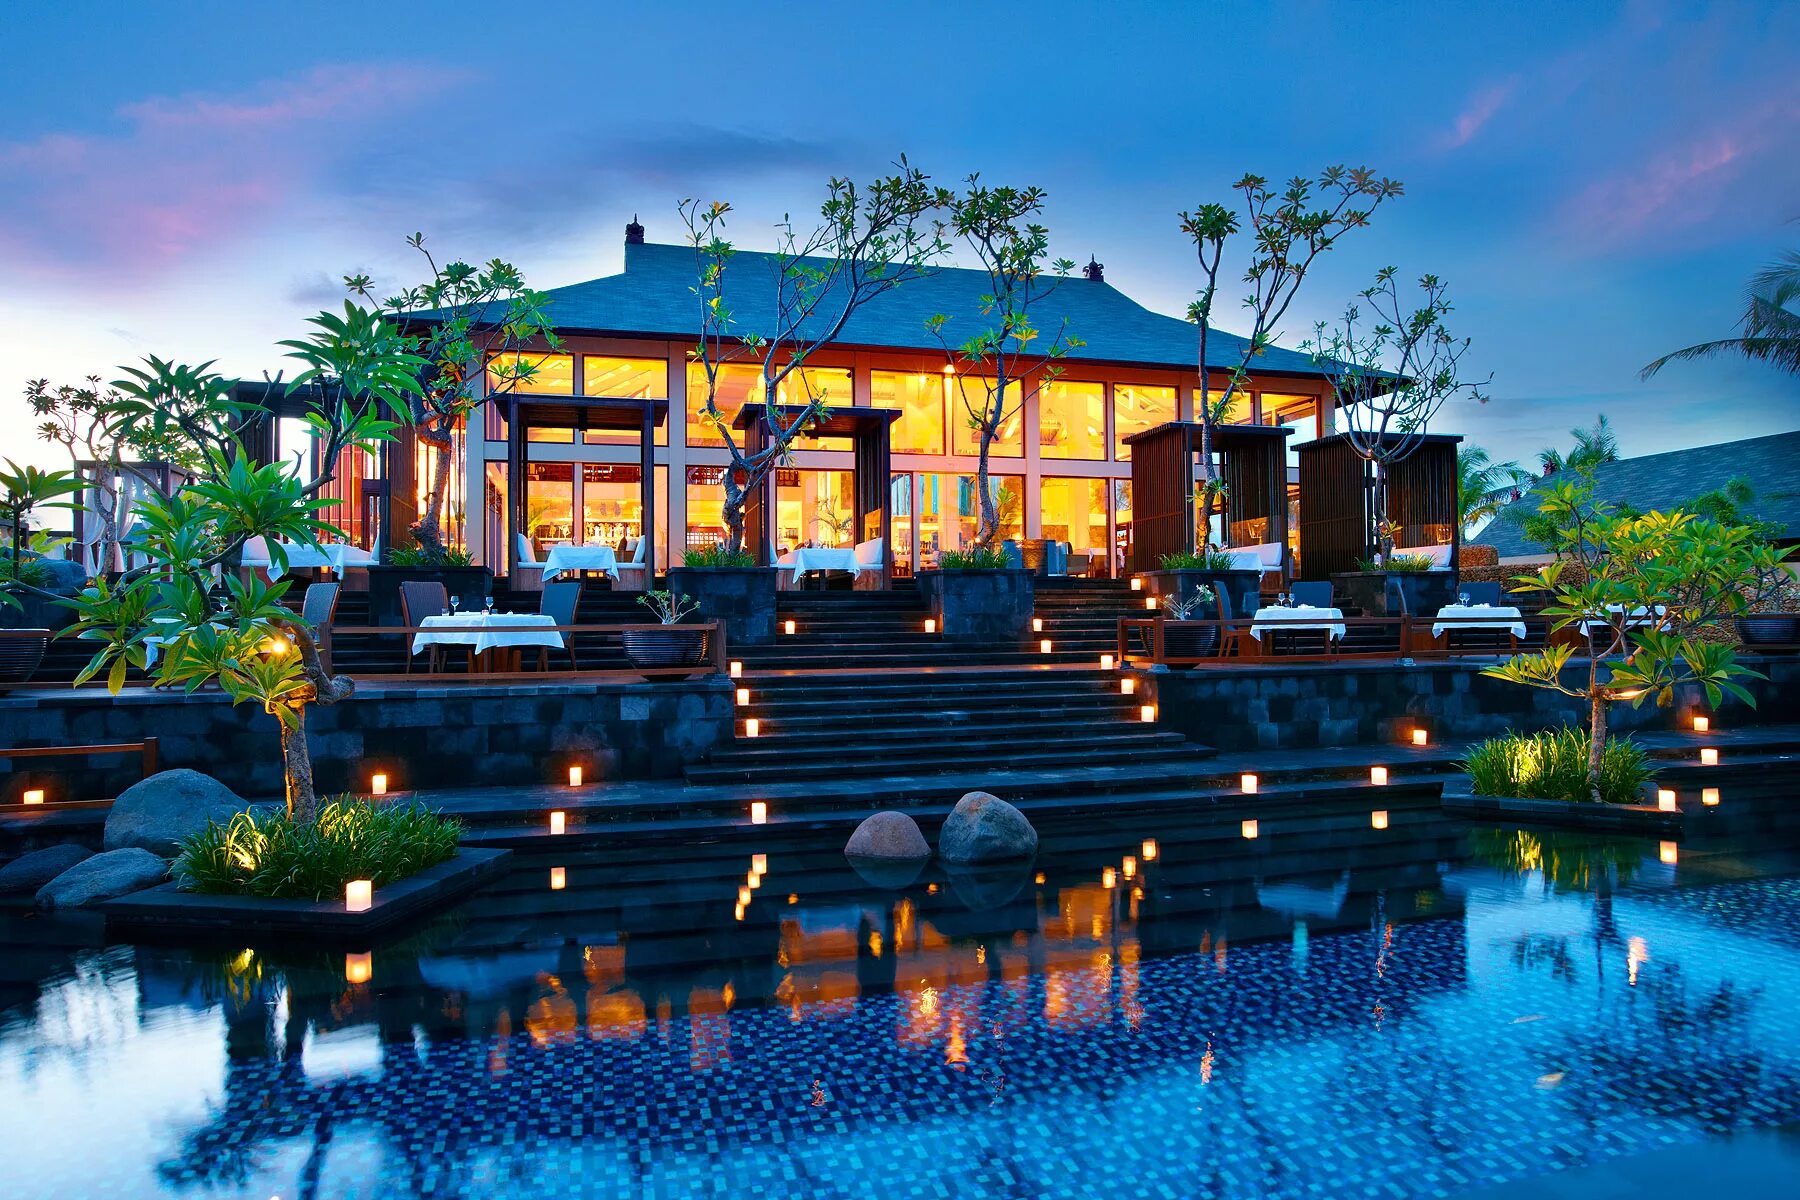 St. Regis 5* Бали. Индонезия Бали. Отель St Regis Бали фото. Терраса Бали бунгало. Минск бали